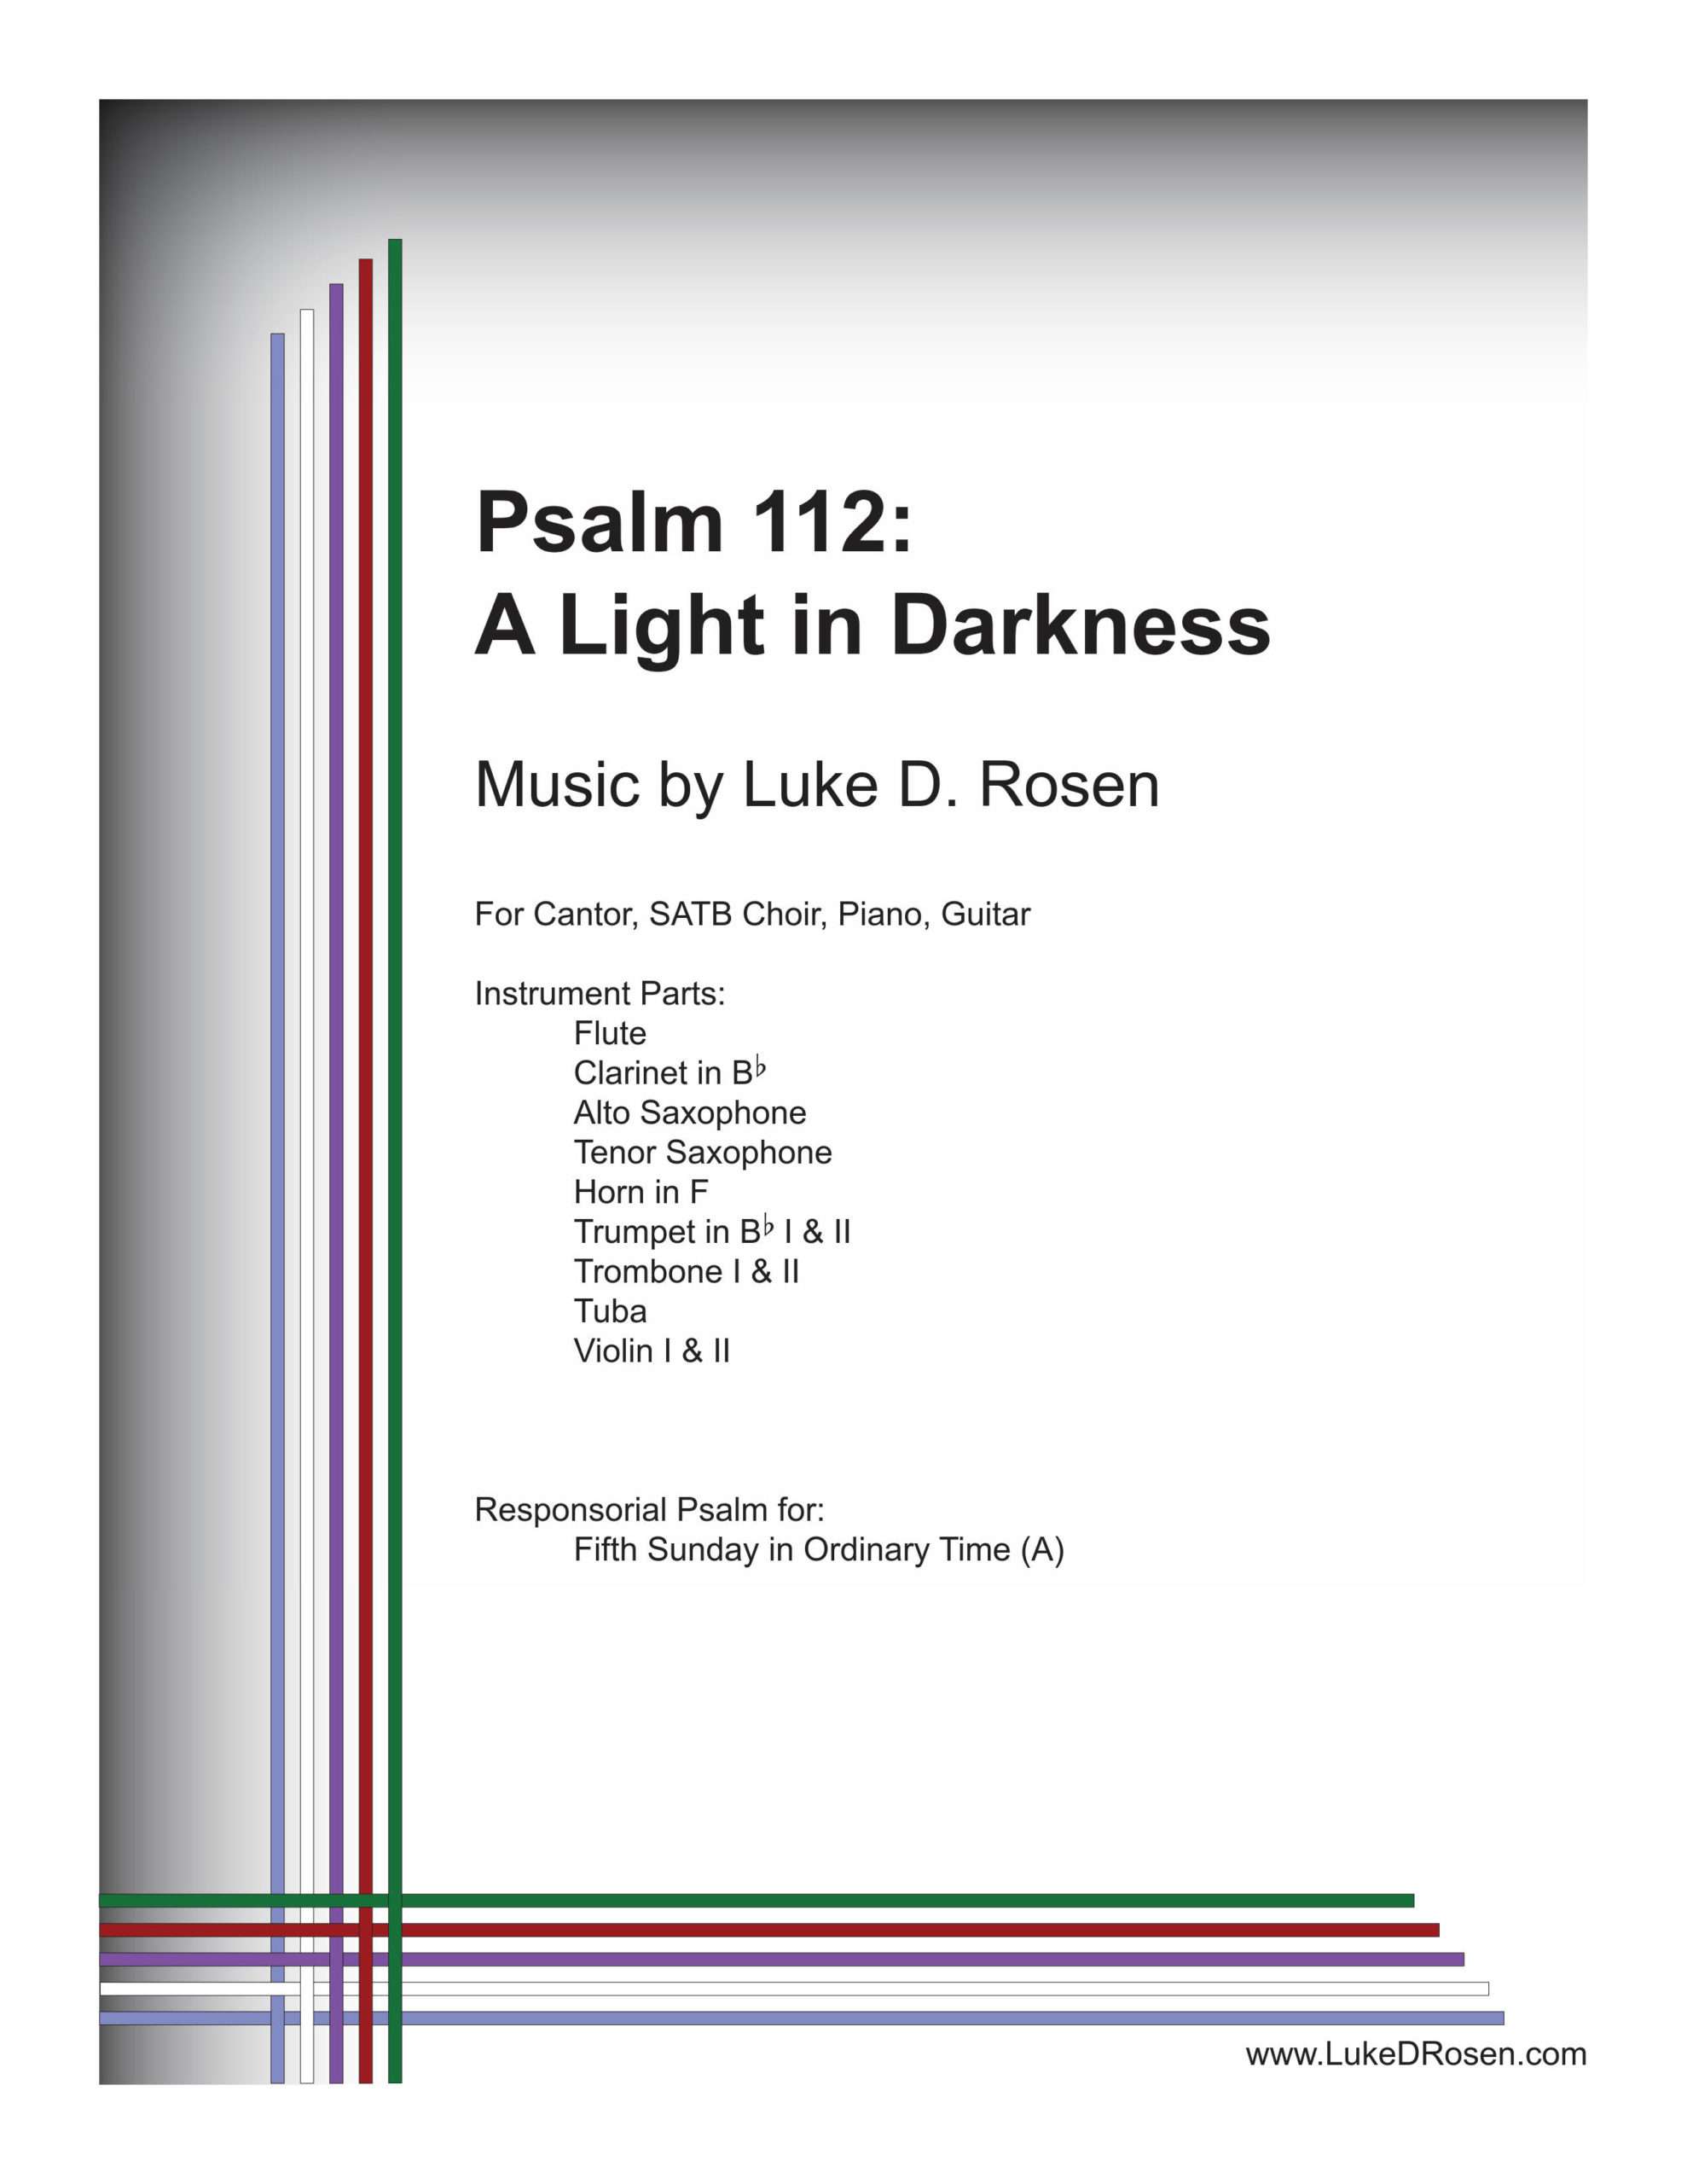 Psalm 112 – A Light in Darkness (Rosen)